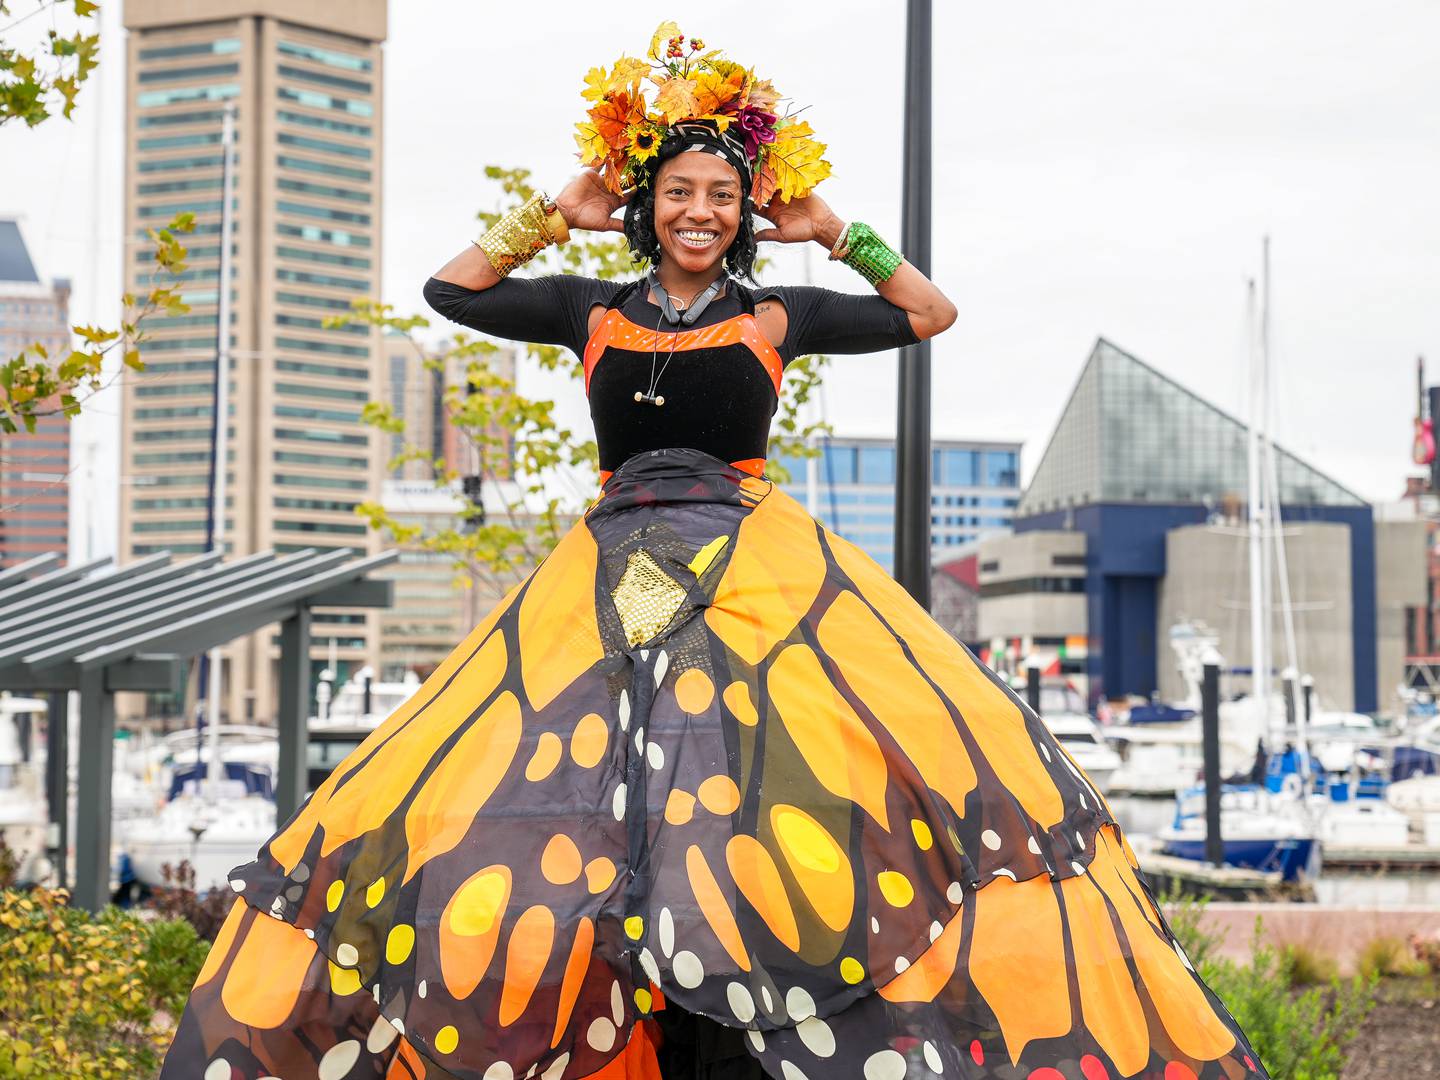 Stilt Walker Danielle Spalding, (39), poses for a photo at the Harbor Harvest Festival in Downtown Baltimore.